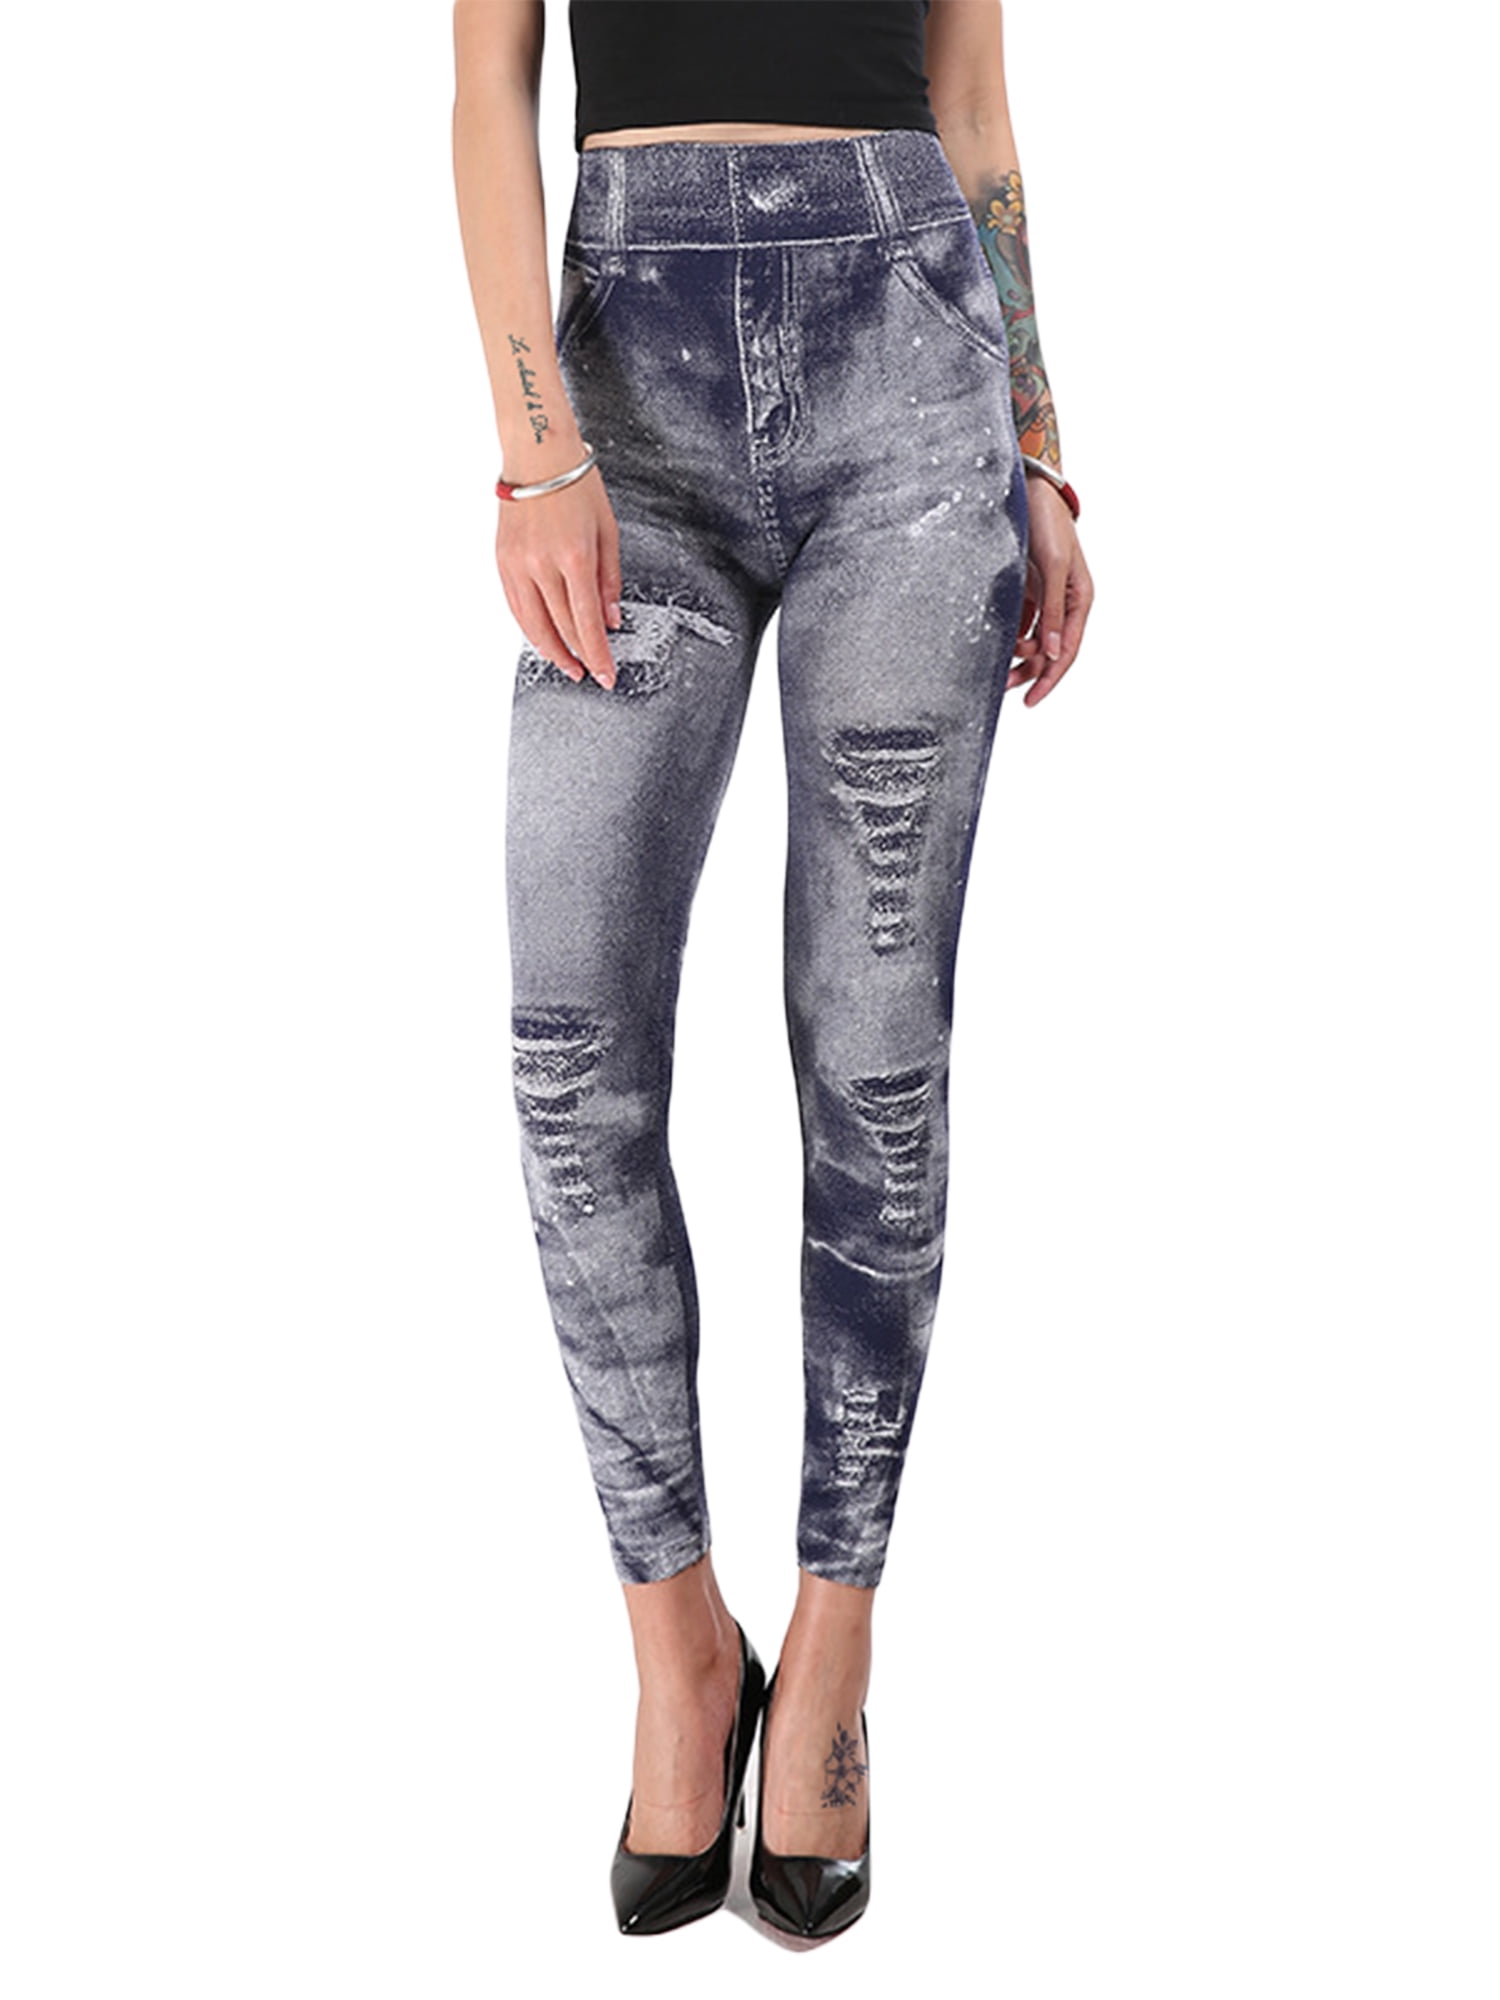 Vaslanda Denim Leggings Jeans Jeggings Skinny Pants for Women Streetwear  High Waist Tummy Control Leggings Slim Pencil Trousers